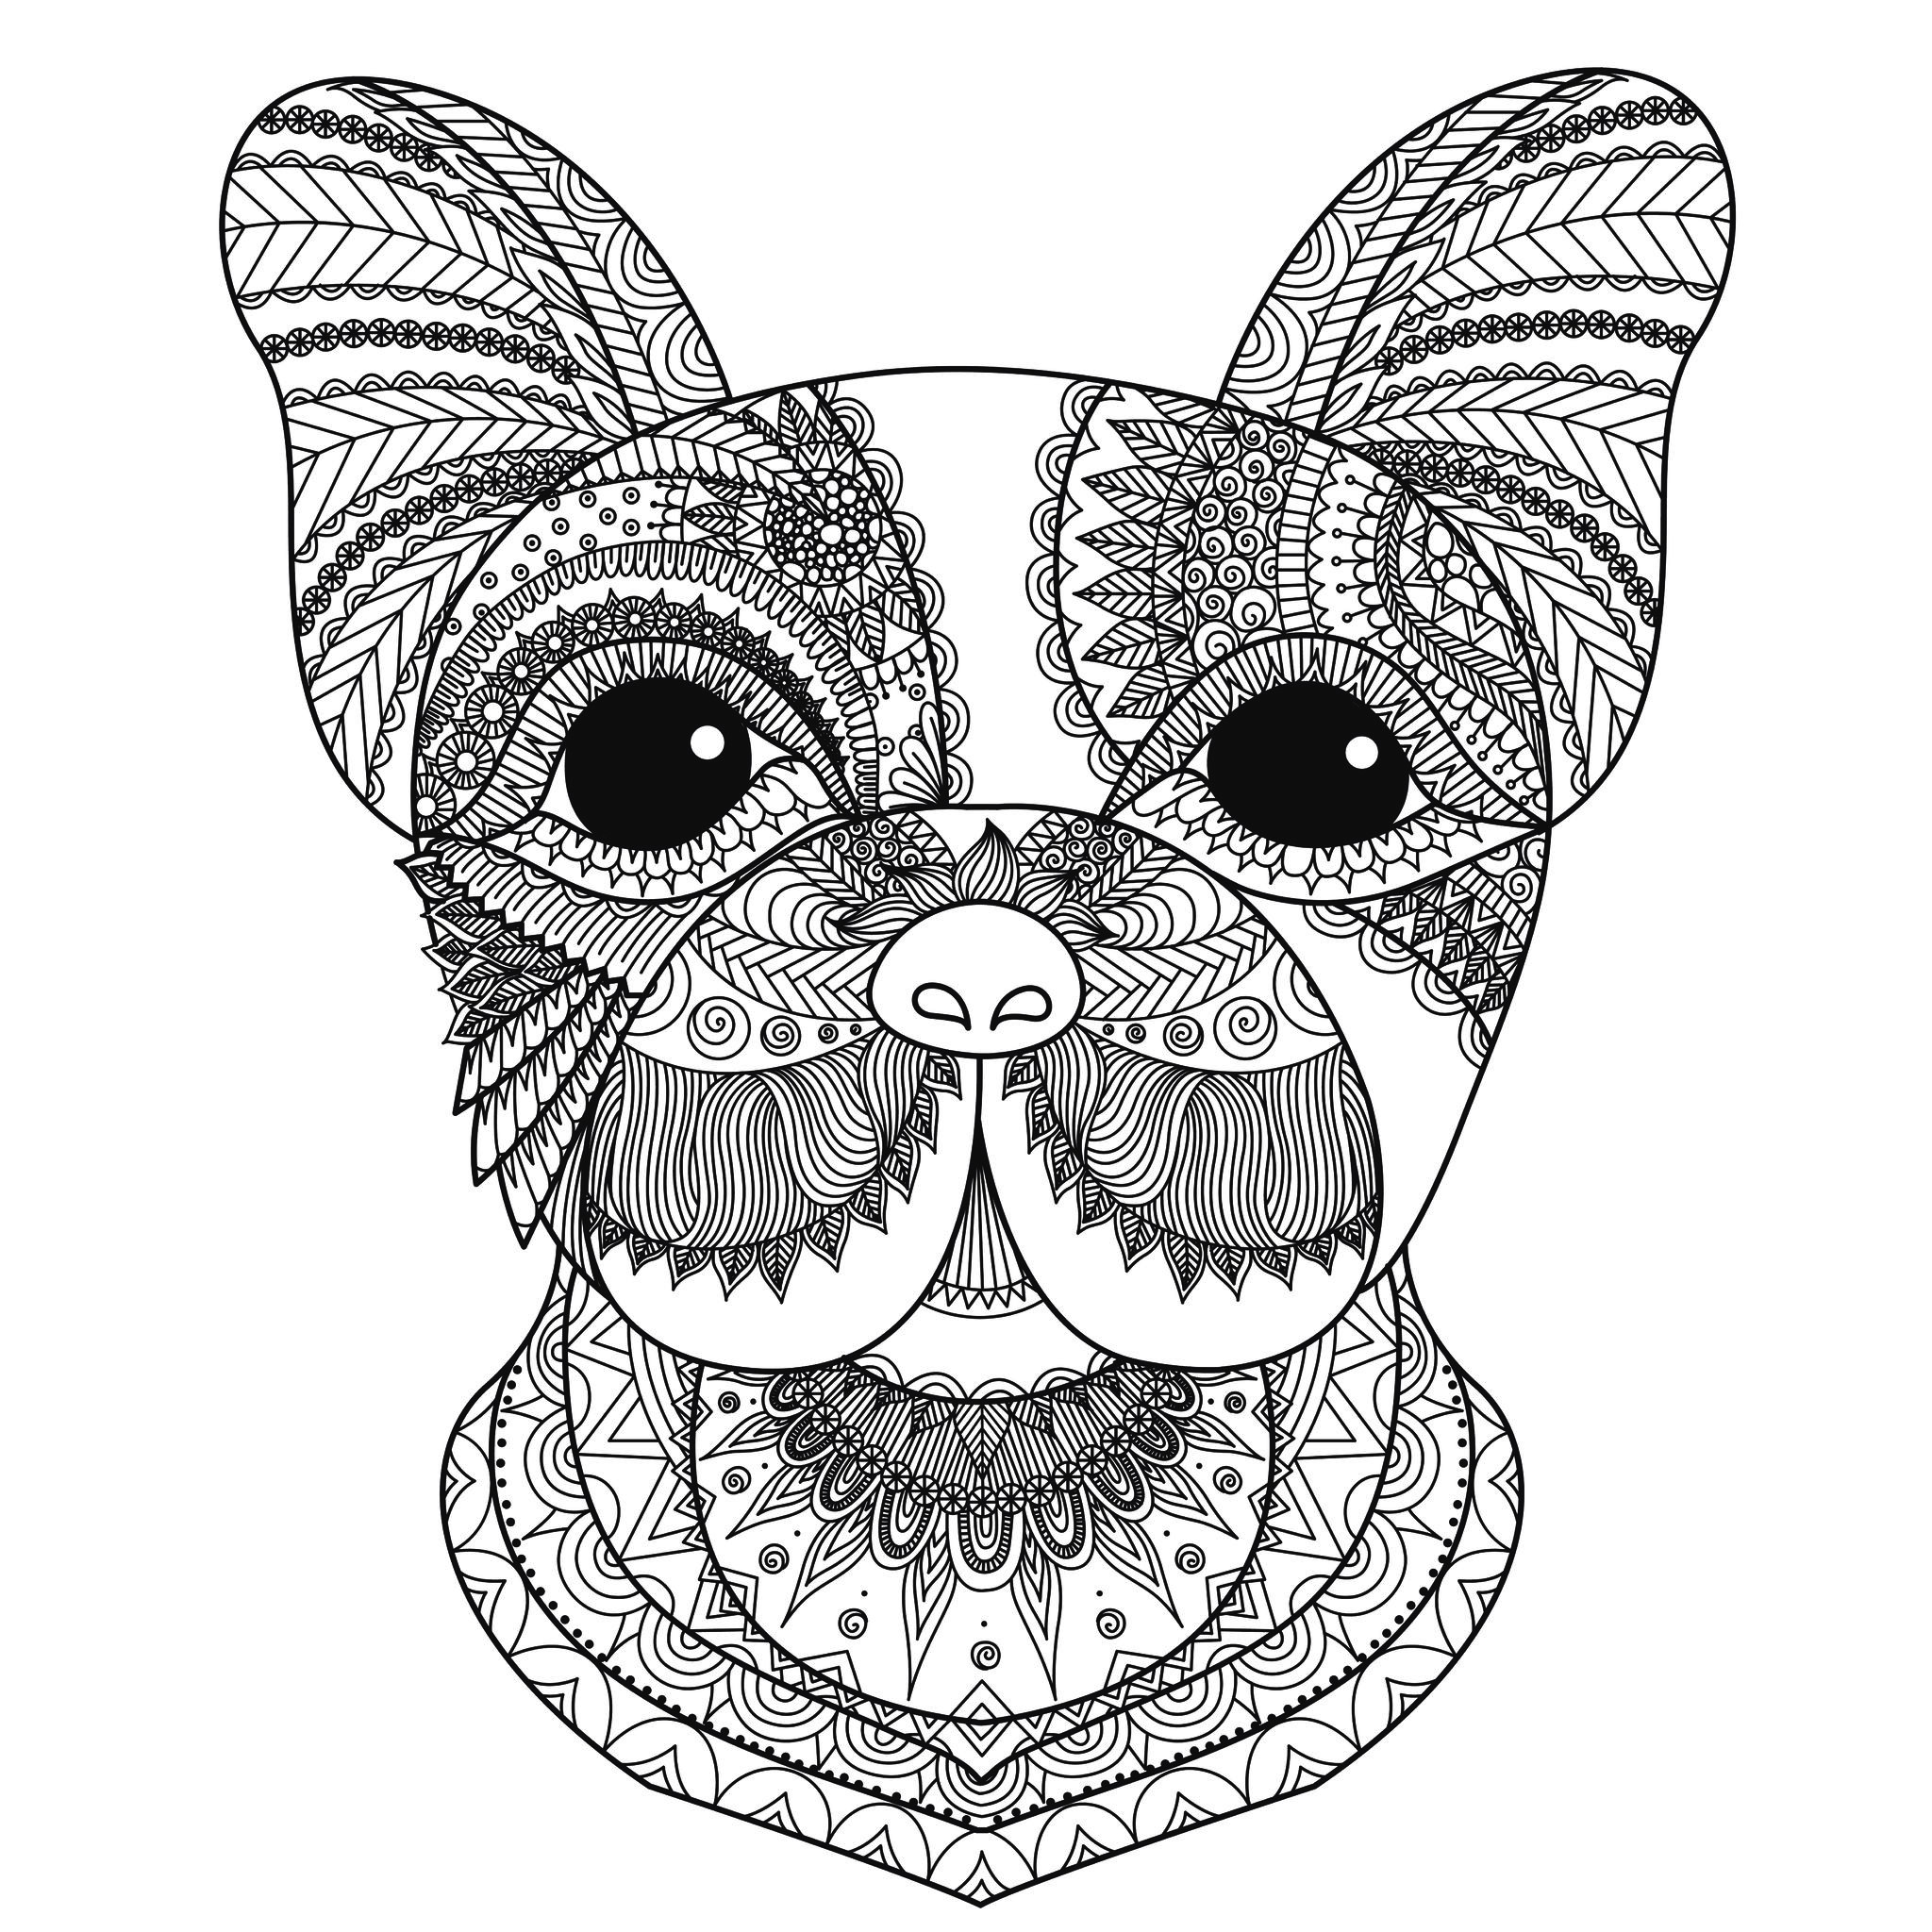 Joli chien avec motifs Zentangle, Artiste : Bimdeedee   Source : 123rf